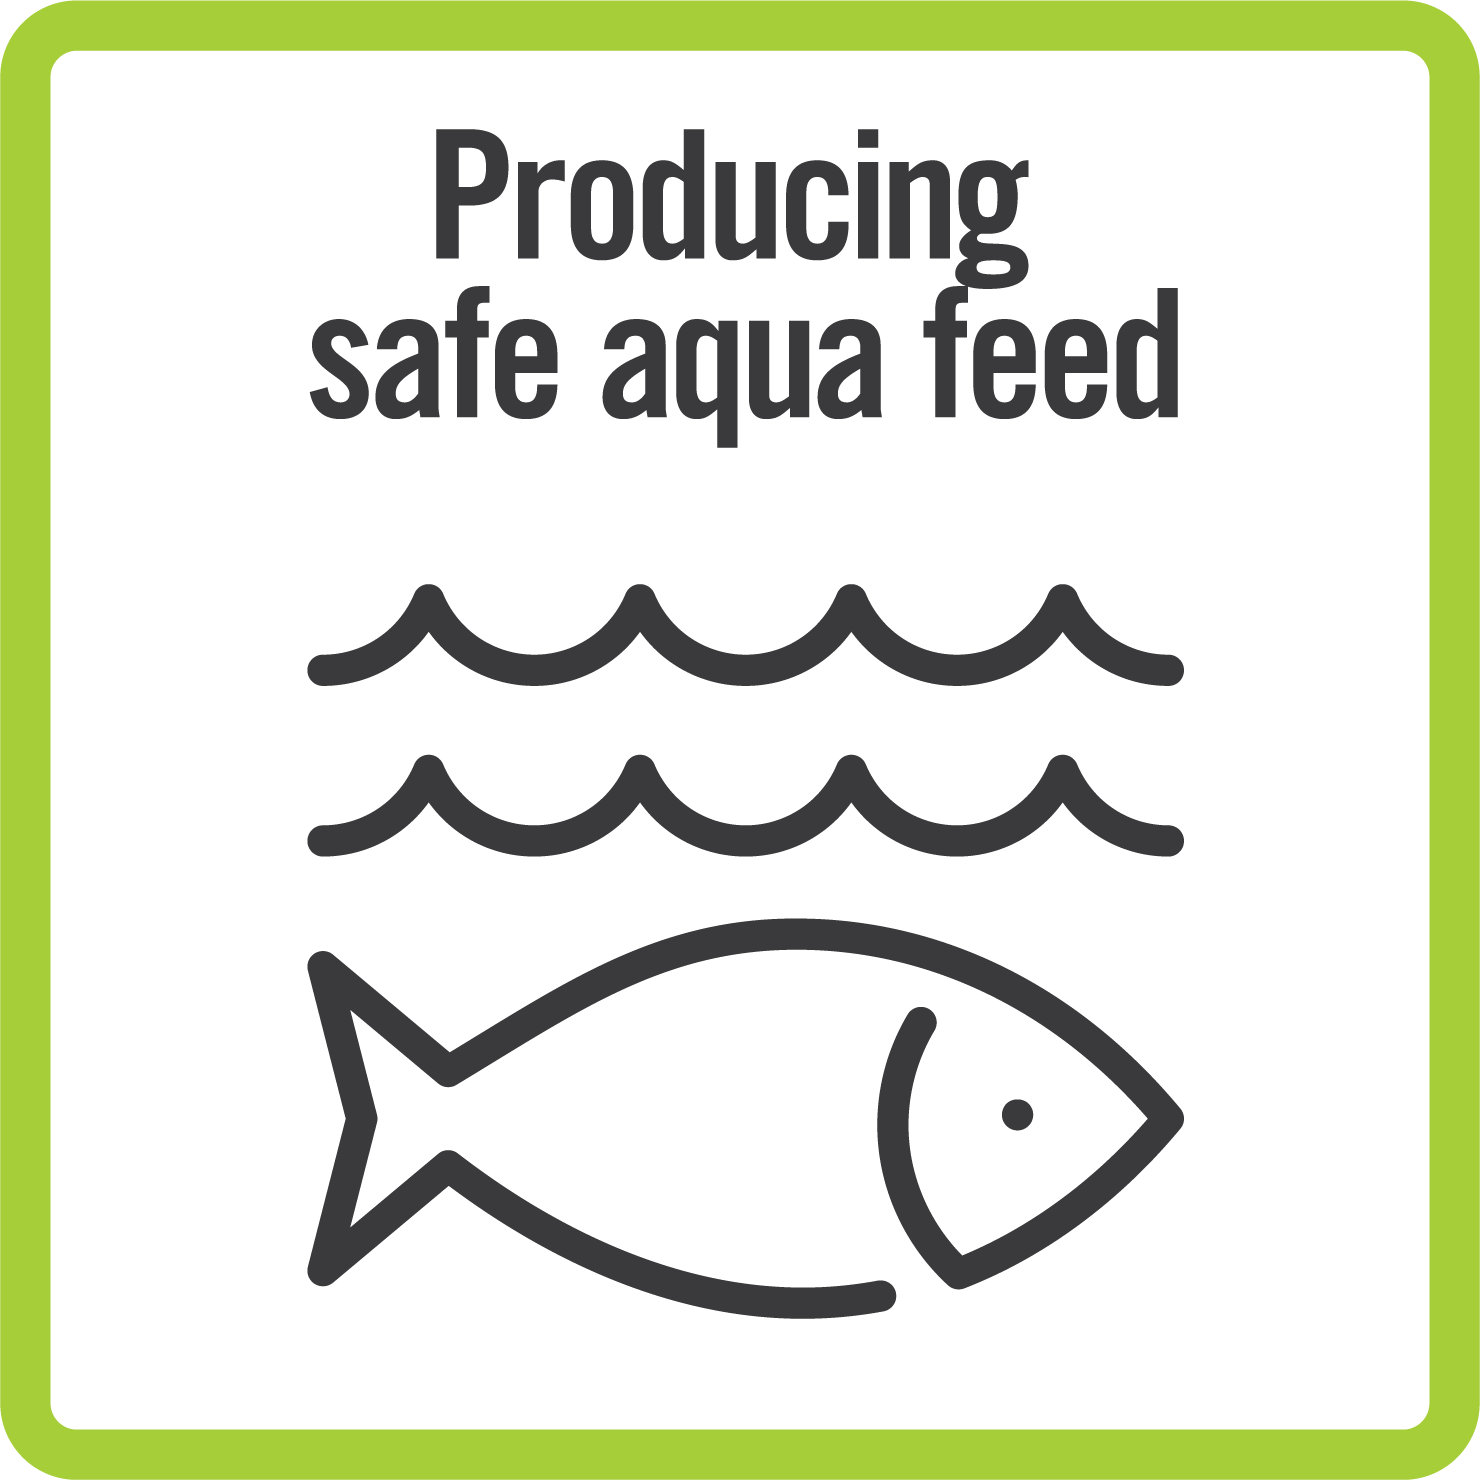 Sustainability_Producing safe aqua feed_B